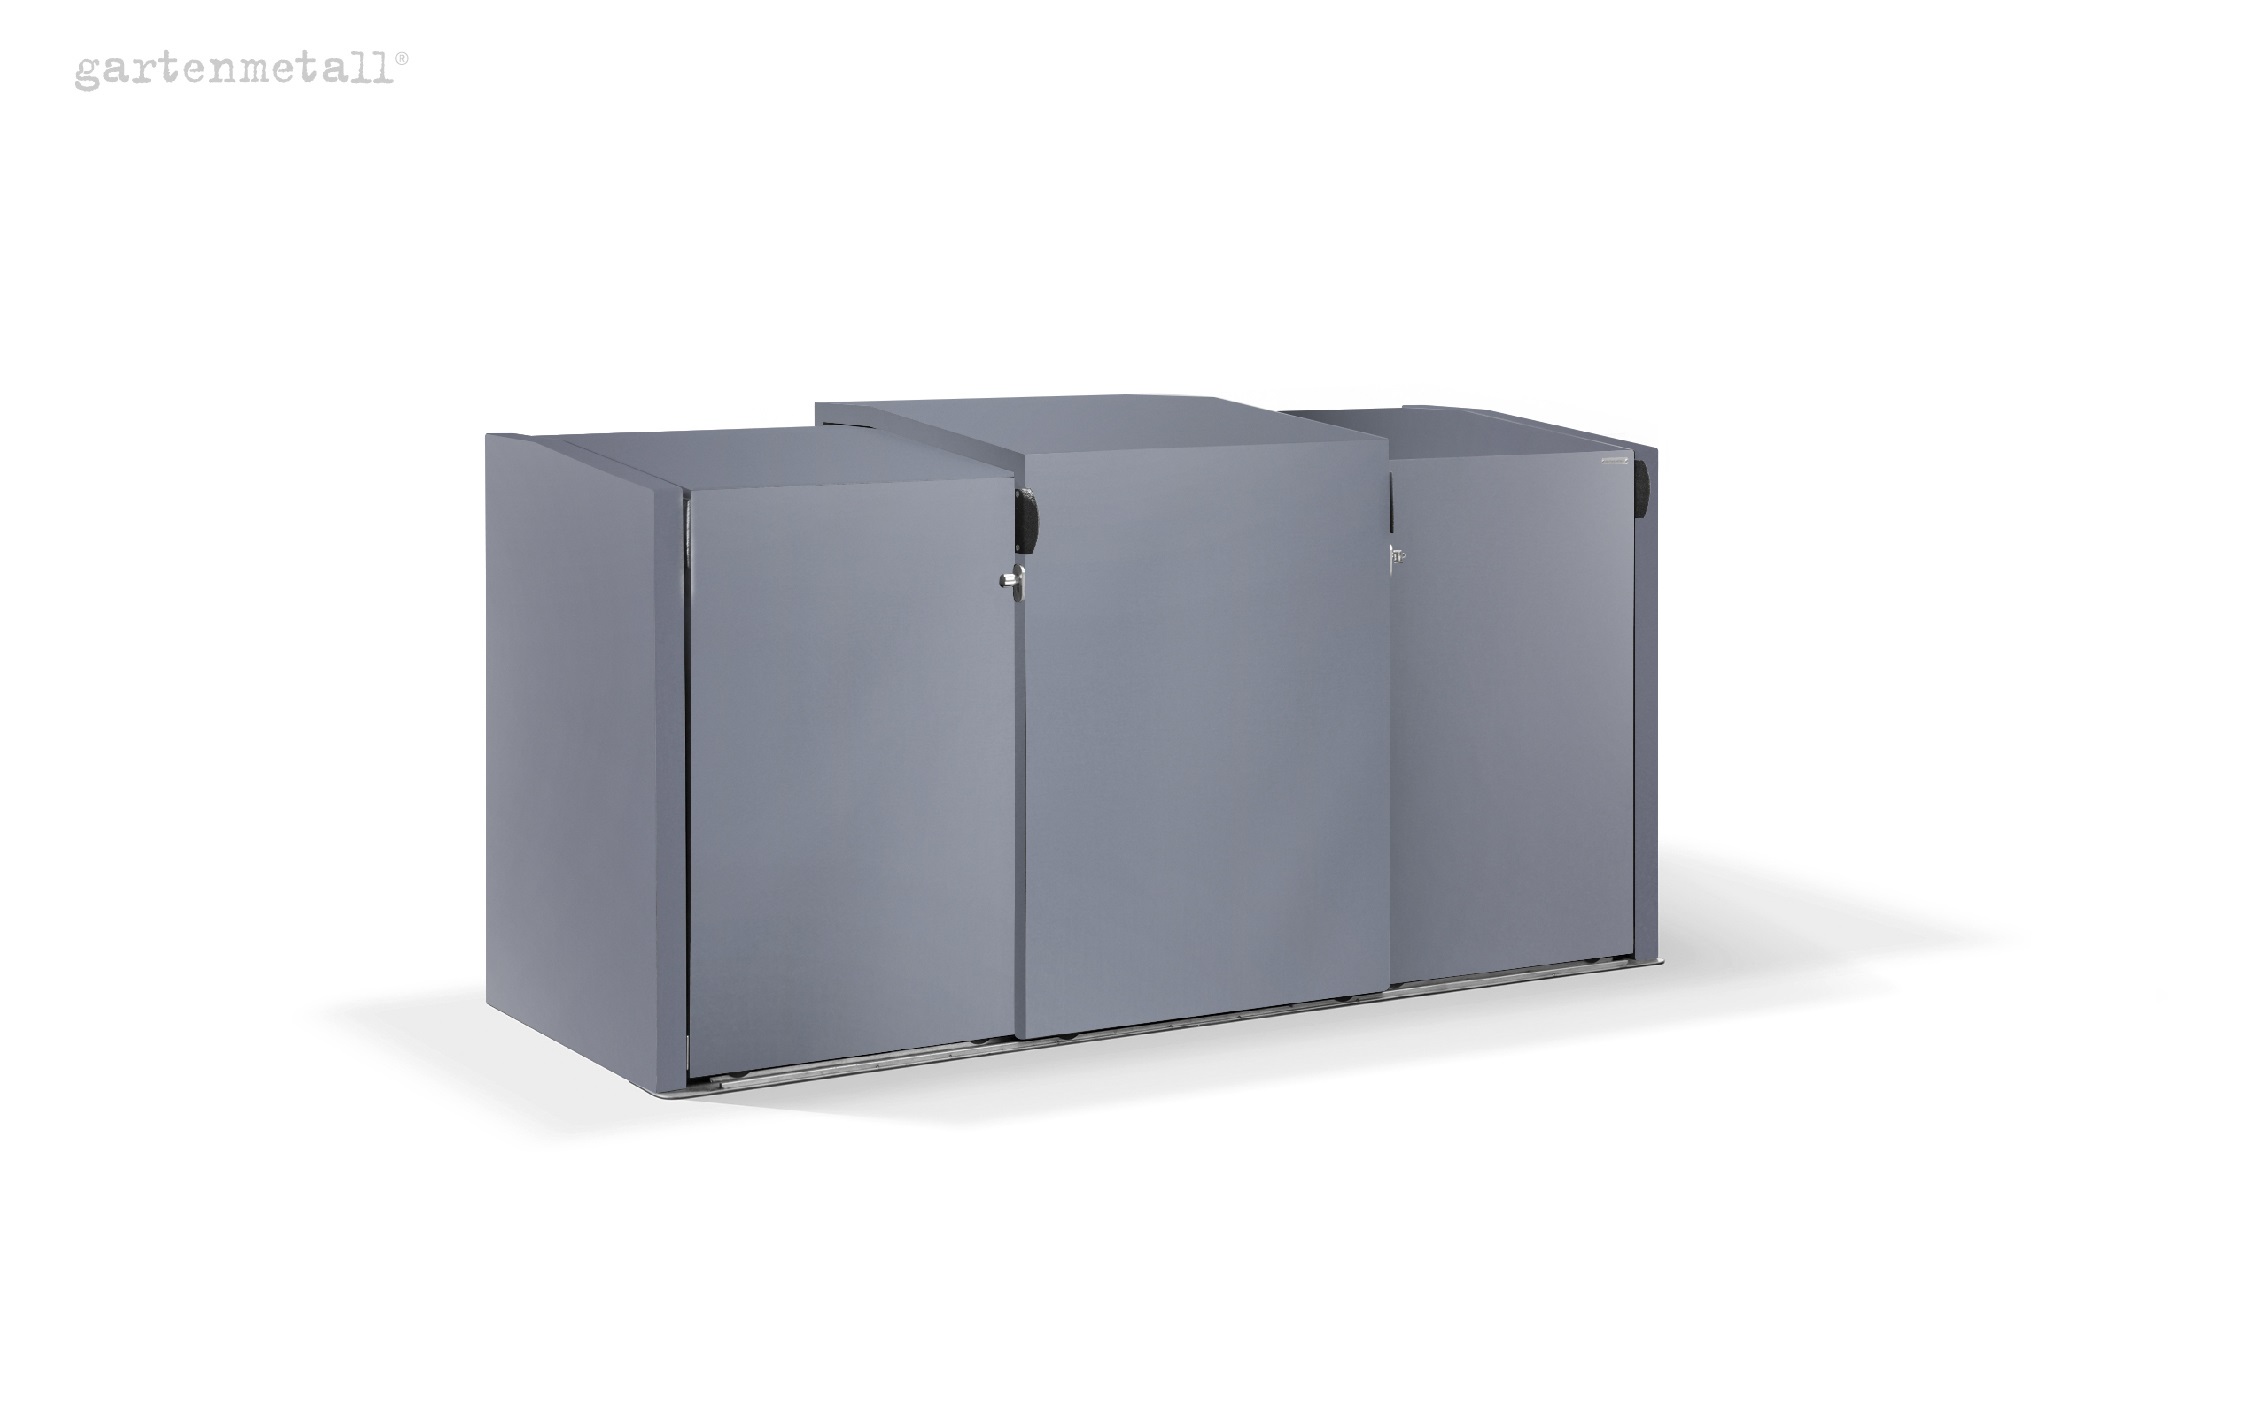 XANTEN bin box for 3 120 l bins with 3 sliding doors